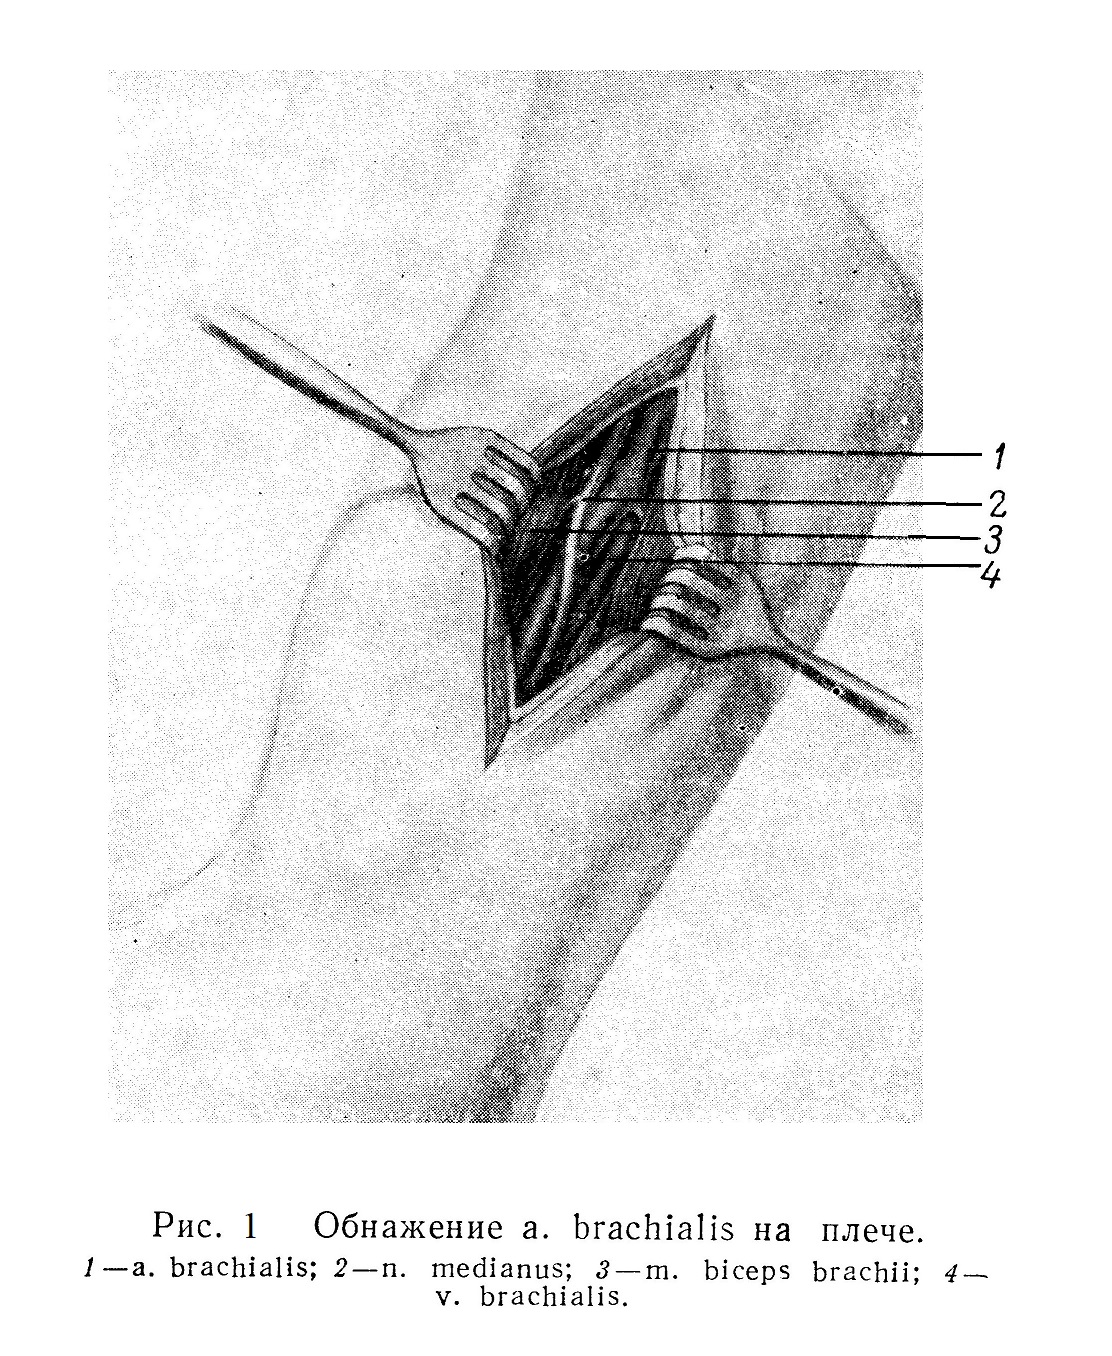 Обнажение а. brachialis на плече.